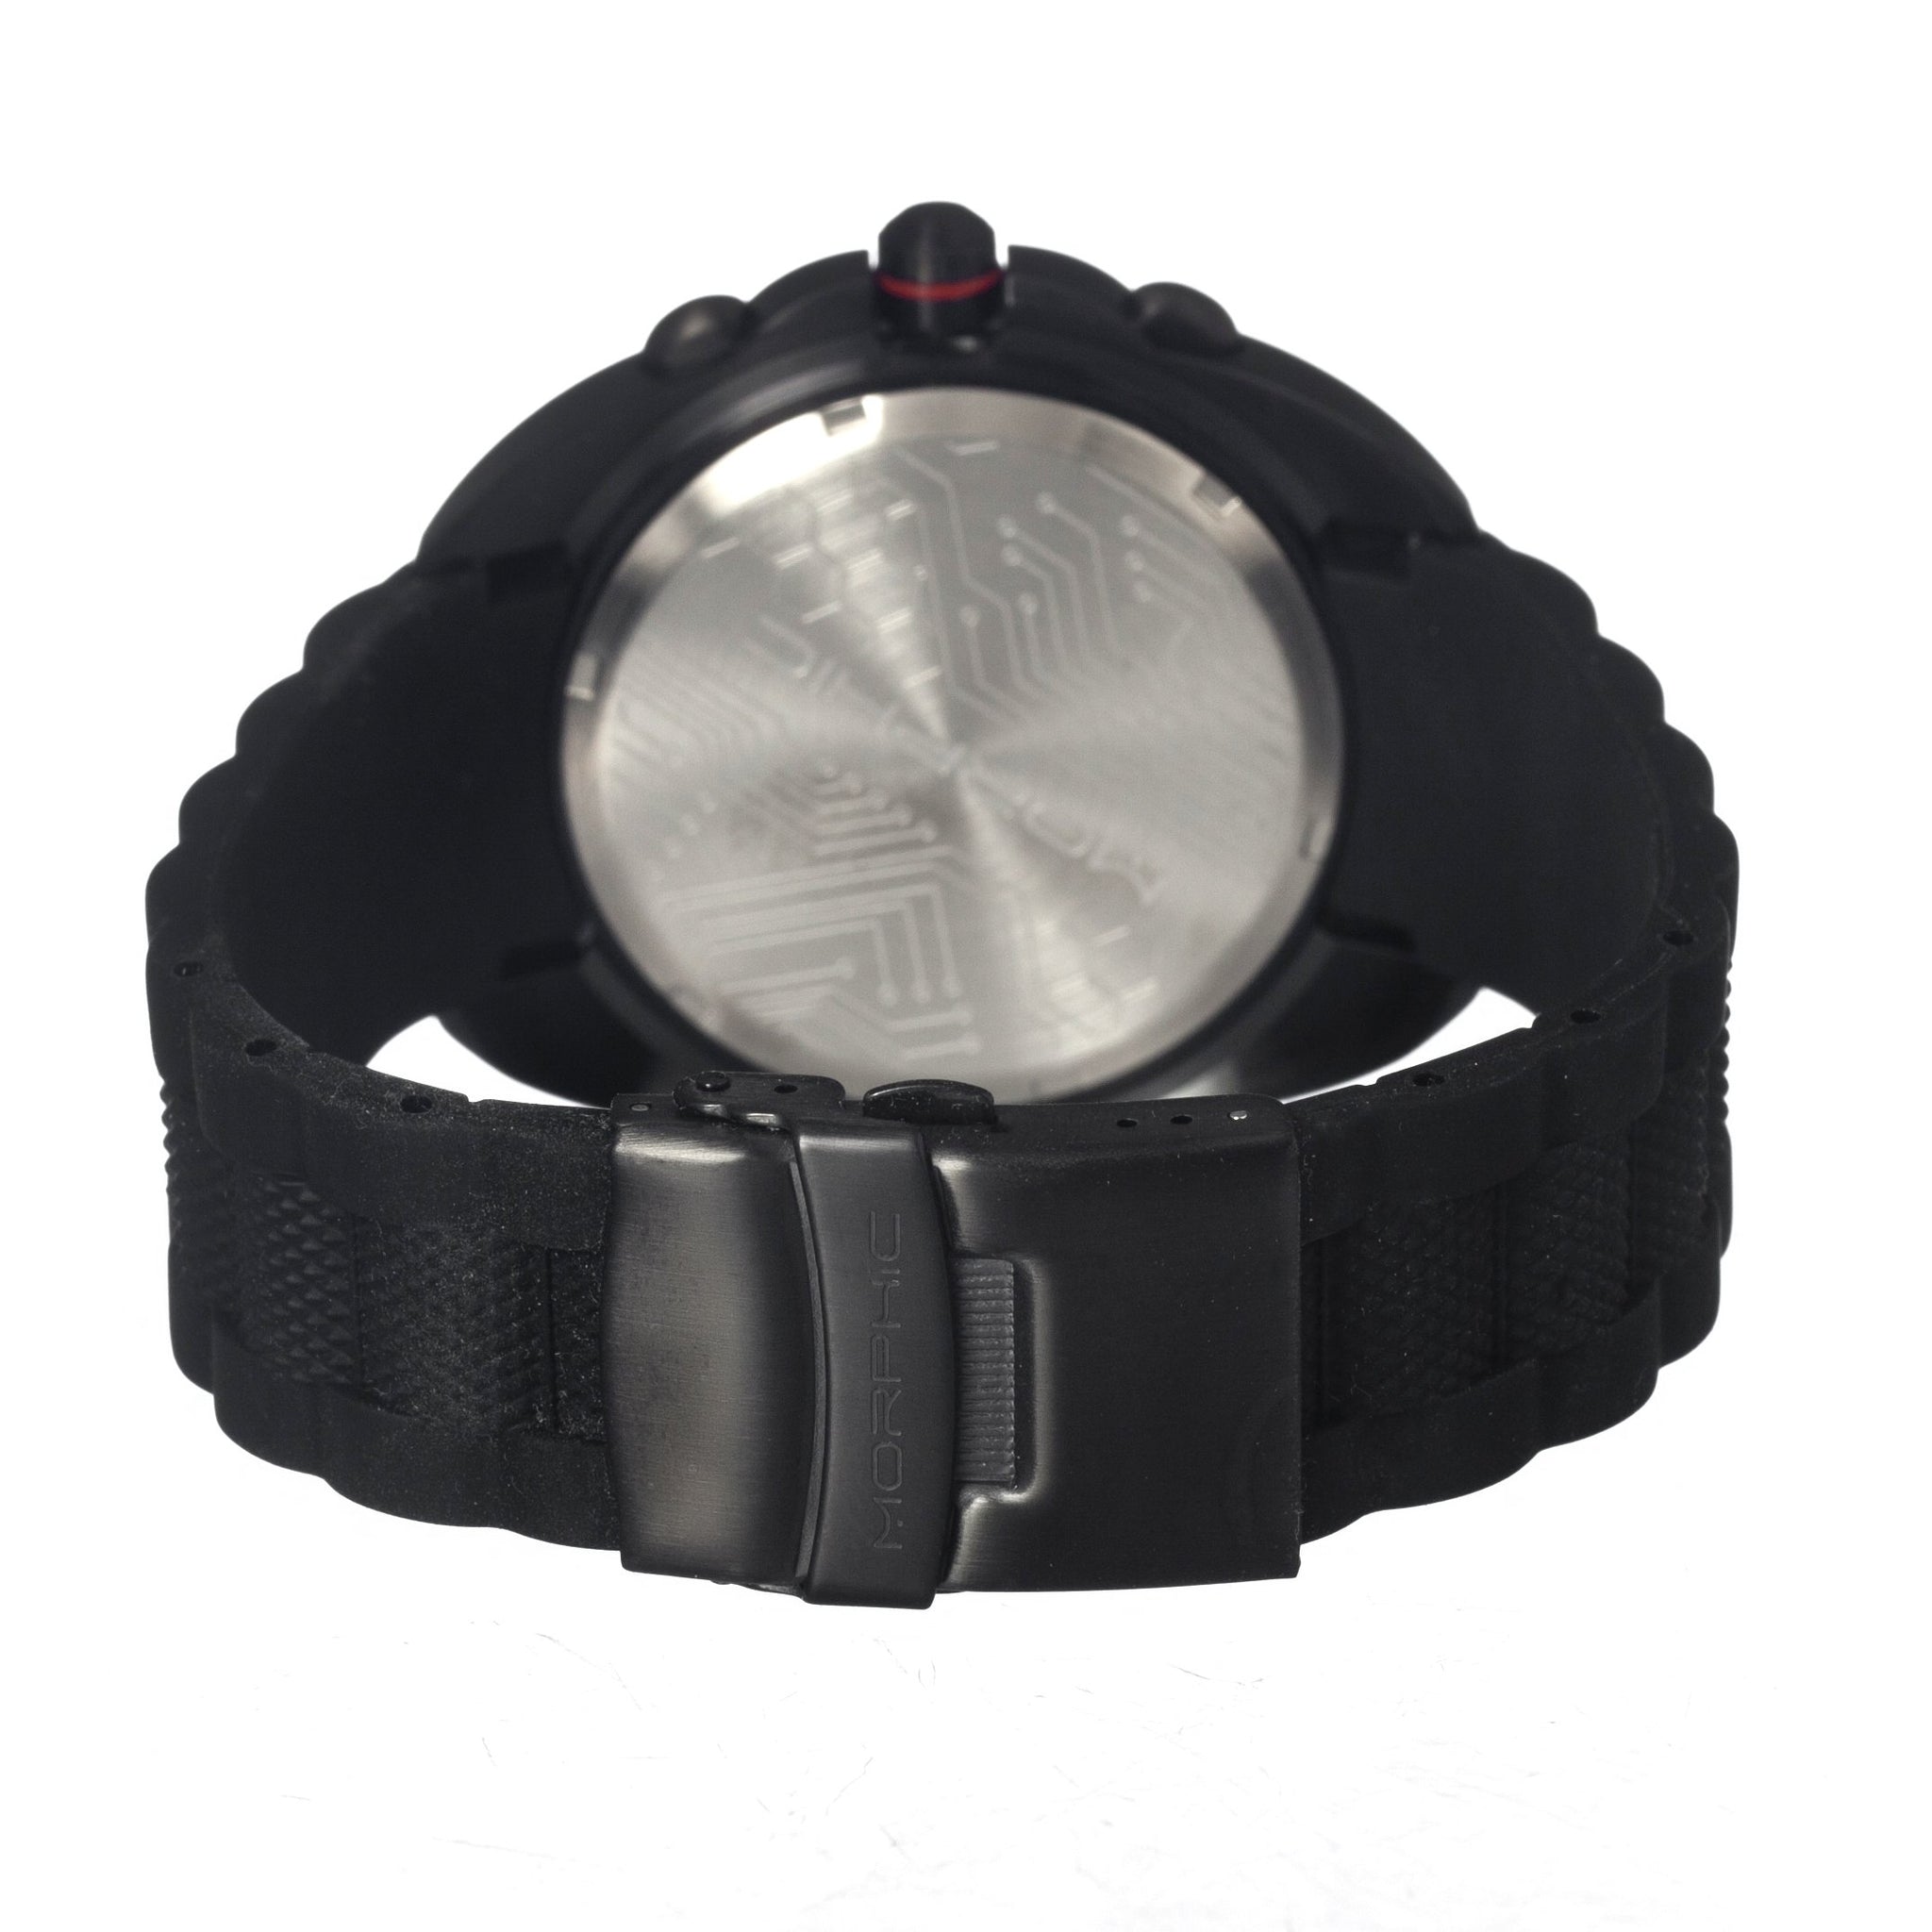 Morphic M25 Series Chronograph Men's Watch - Black - MPH2504